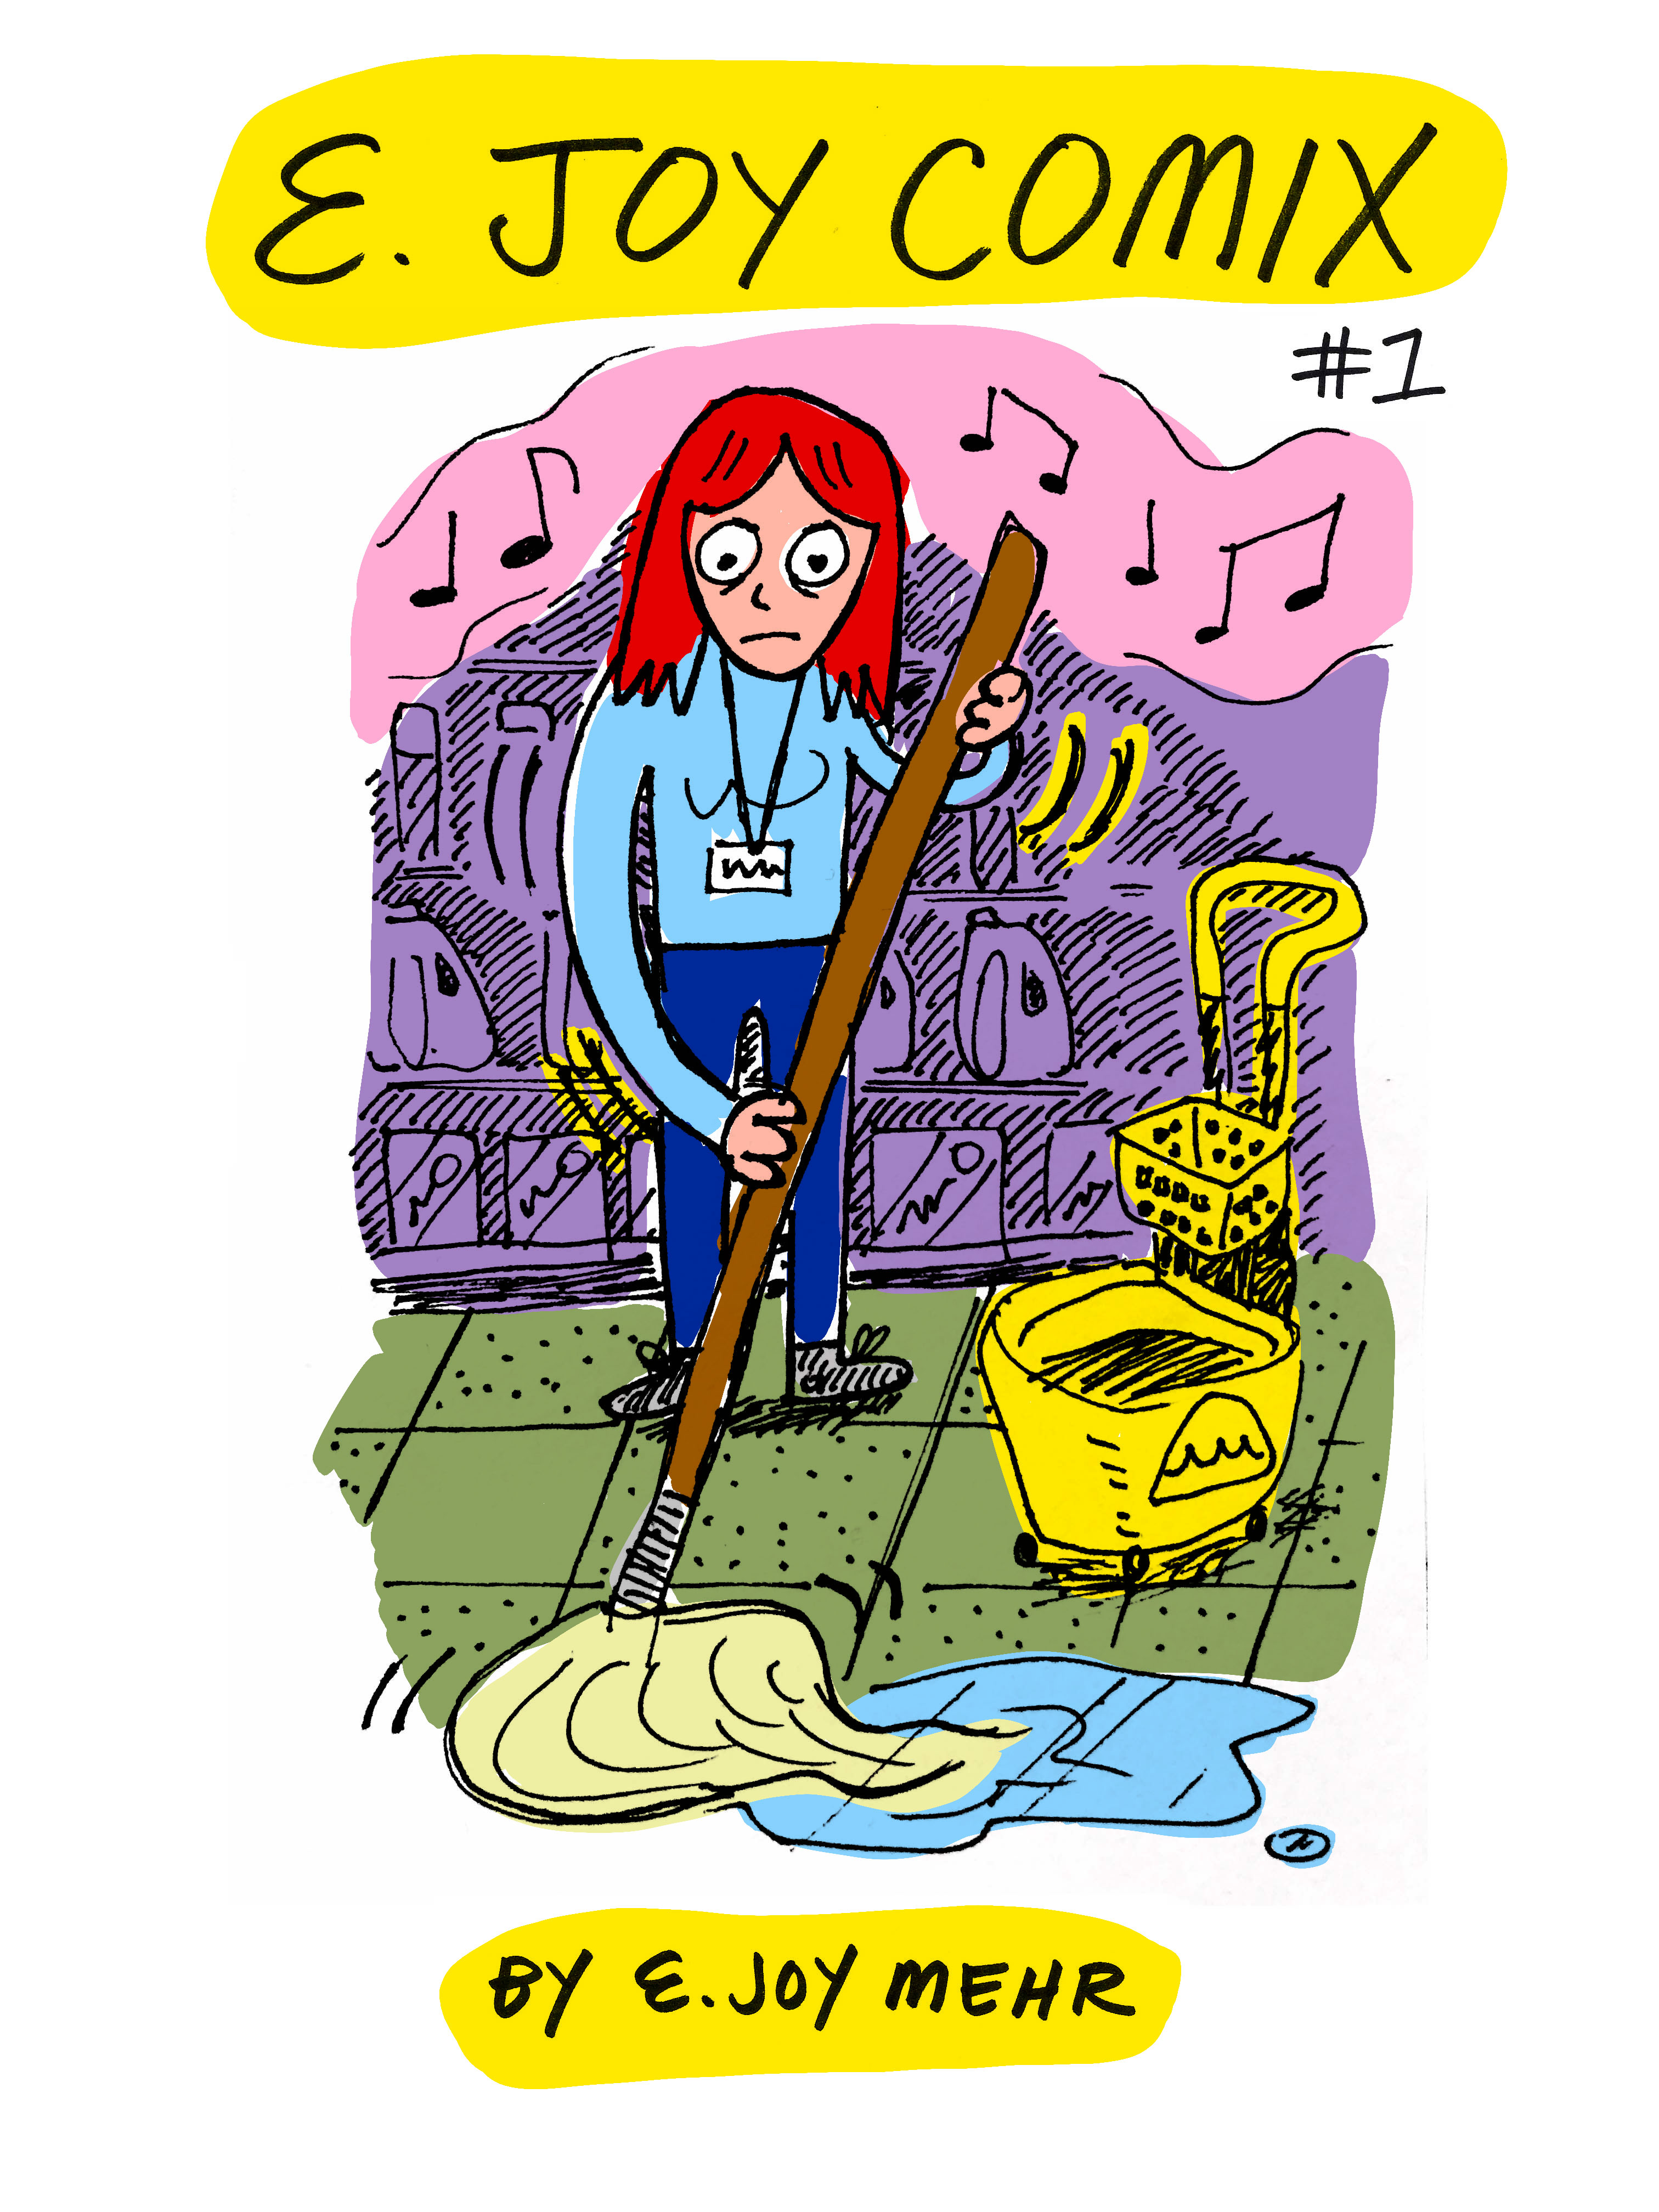 E Joy Comix #1 cover (disgruntled woman mopping)